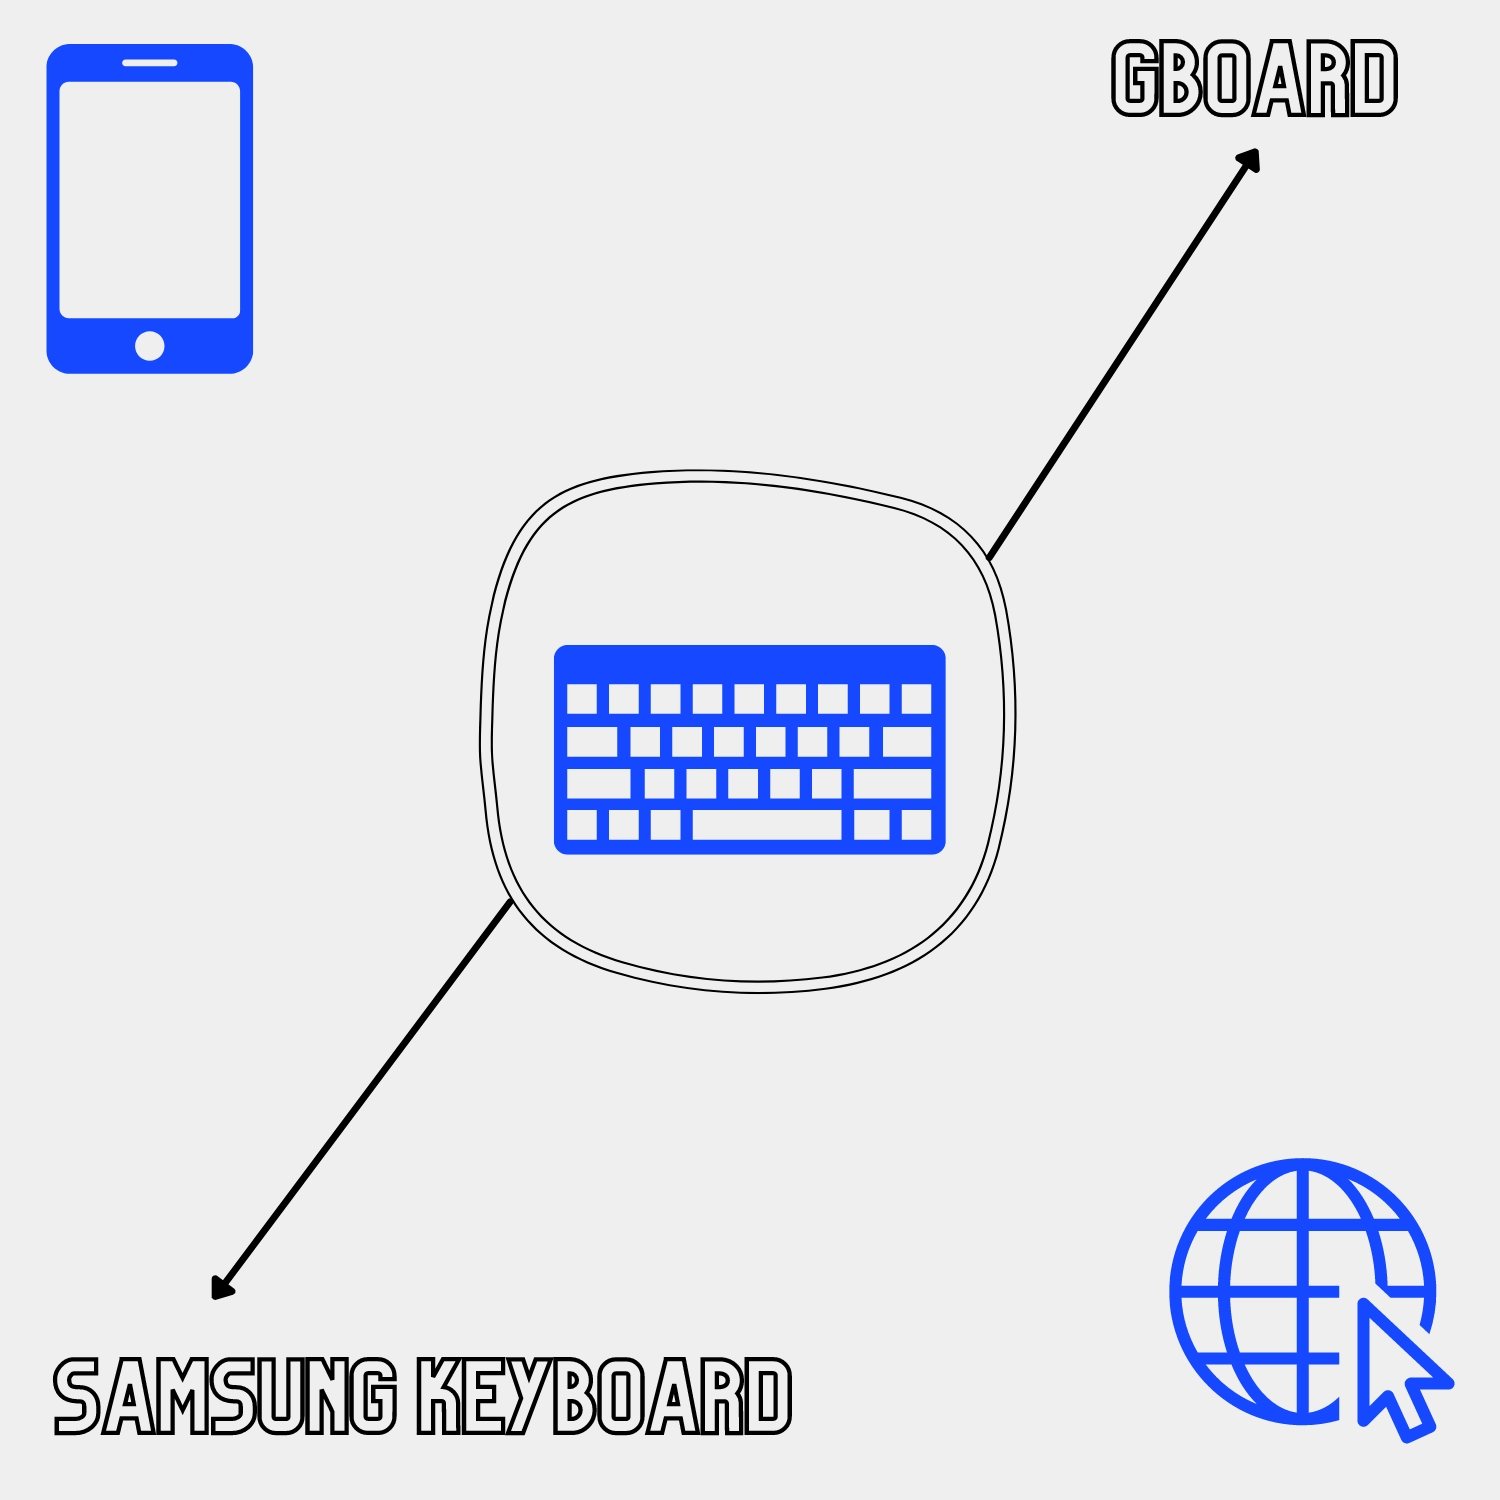 Samsung Keyboard vs. Gboard